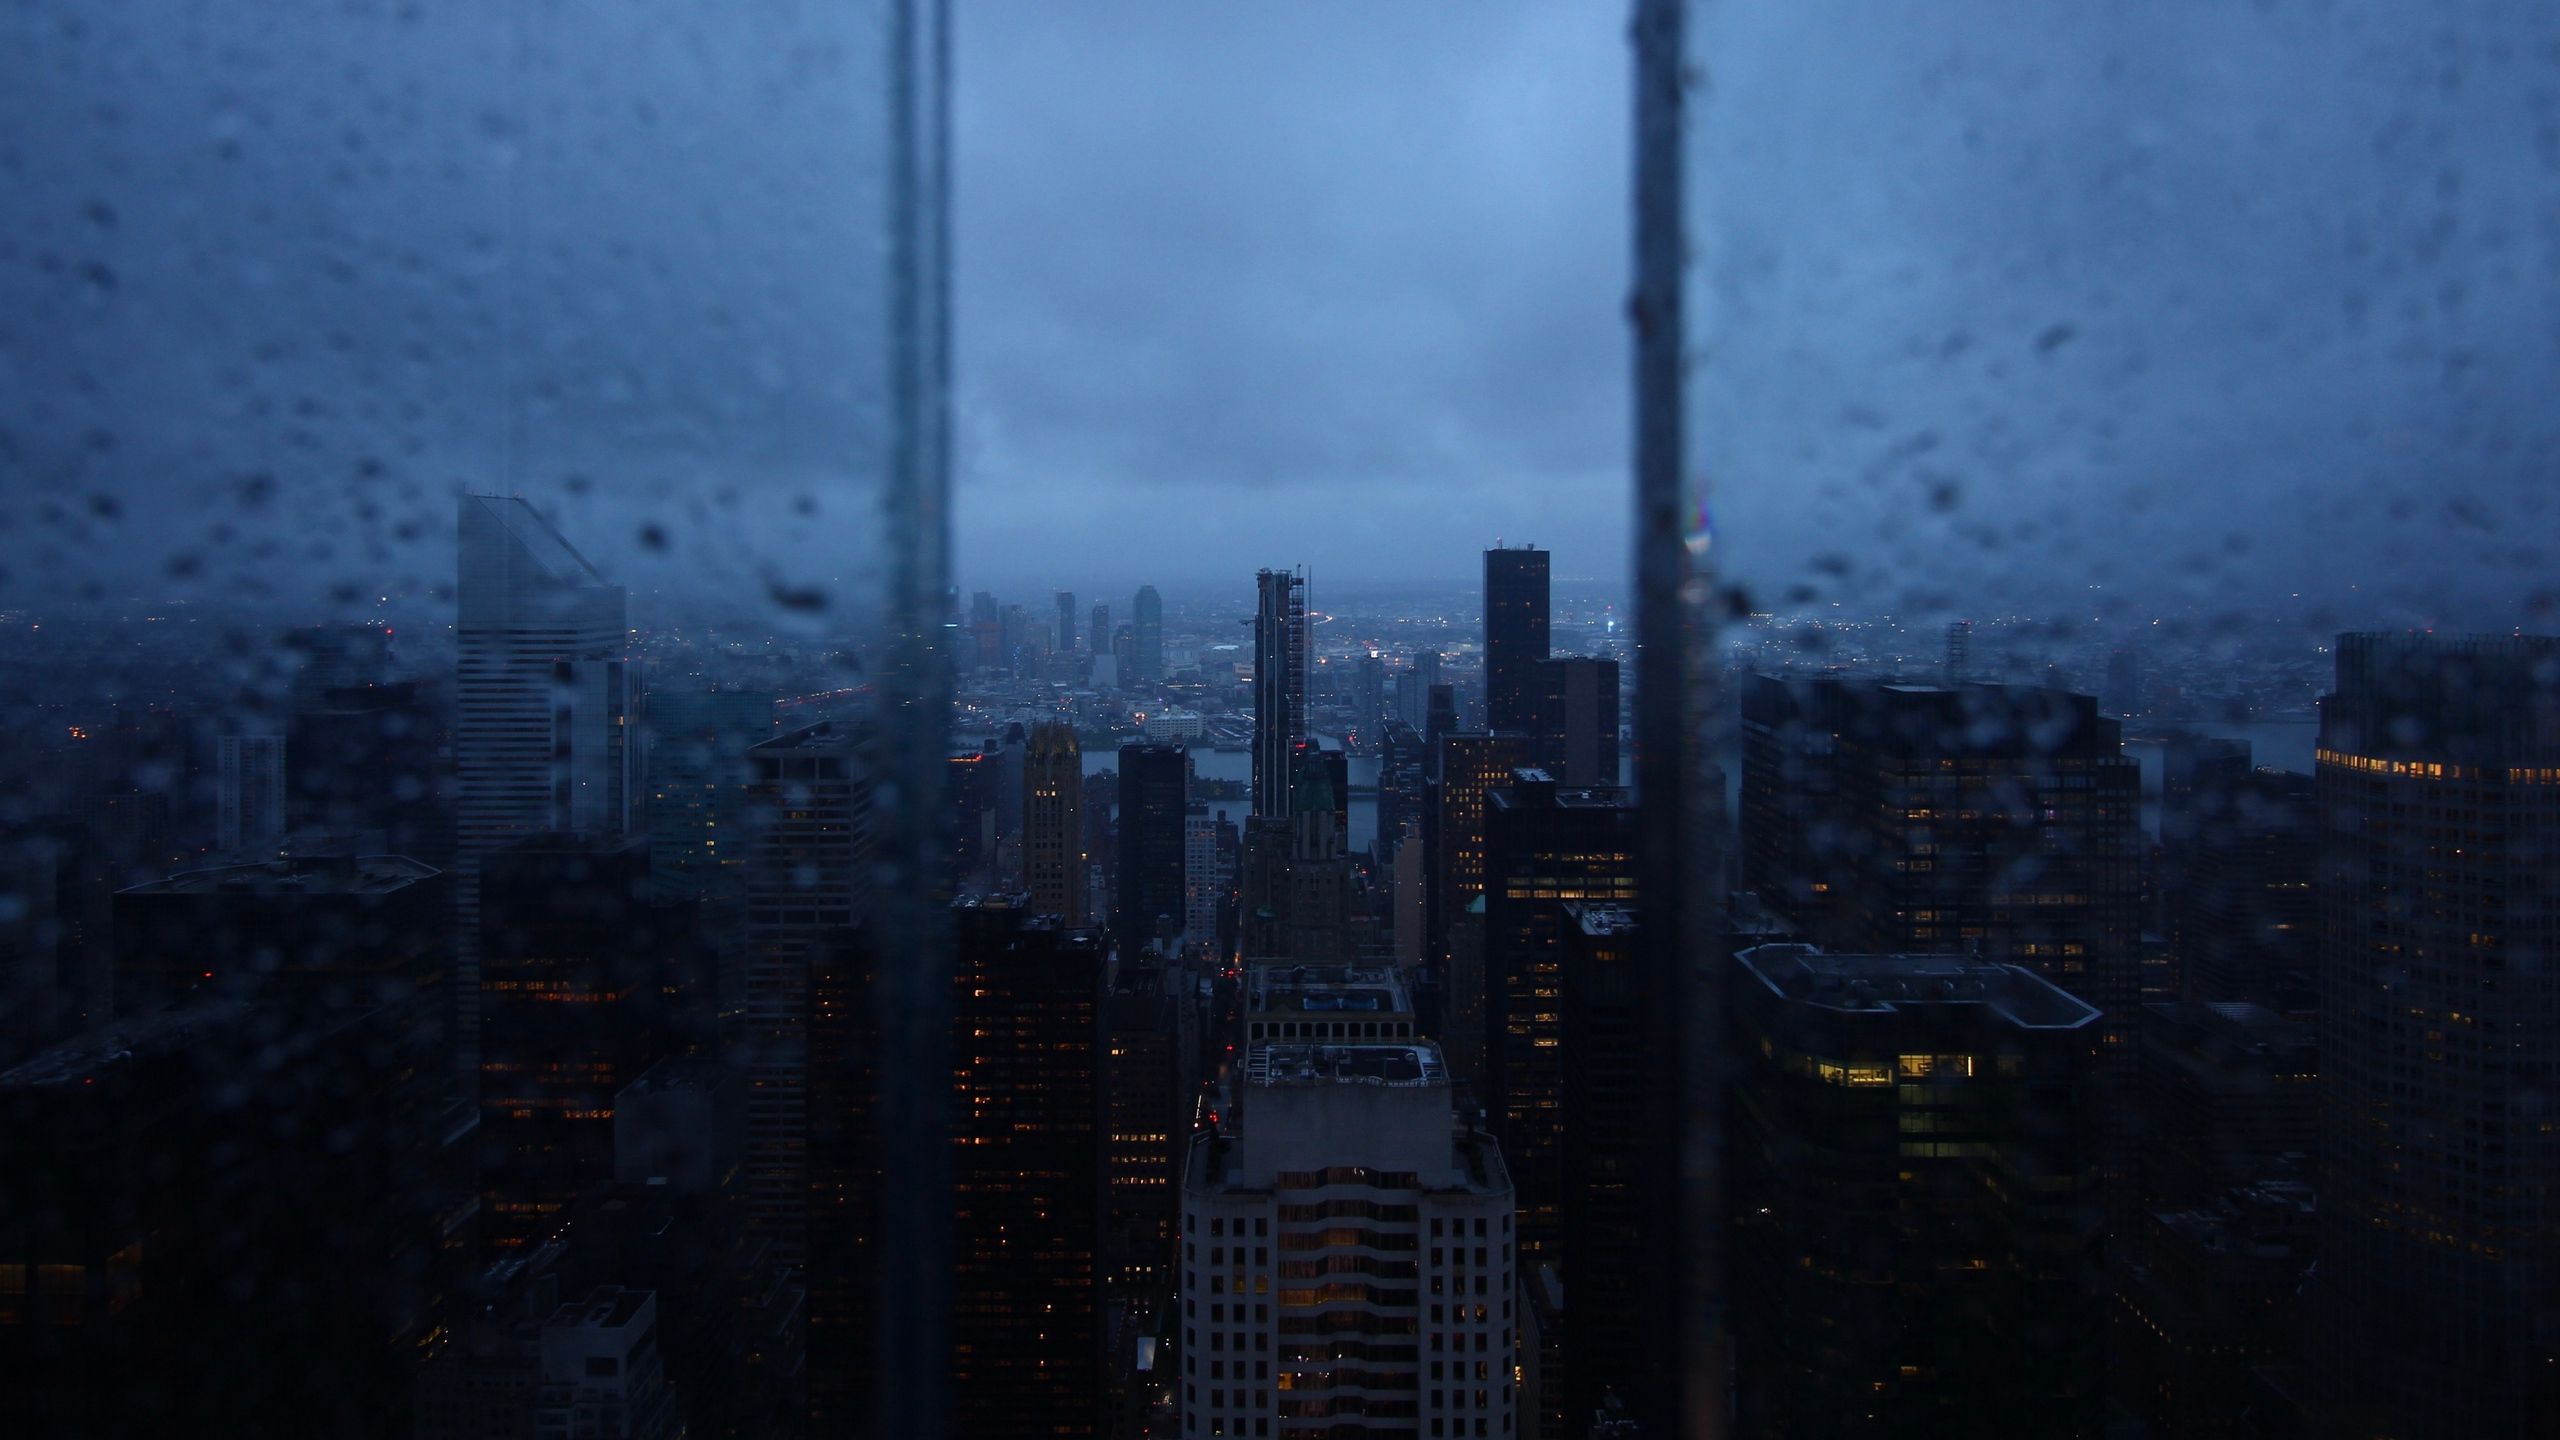 Download wallpaper 2560x1440 night city, window, rain, skyscrapers